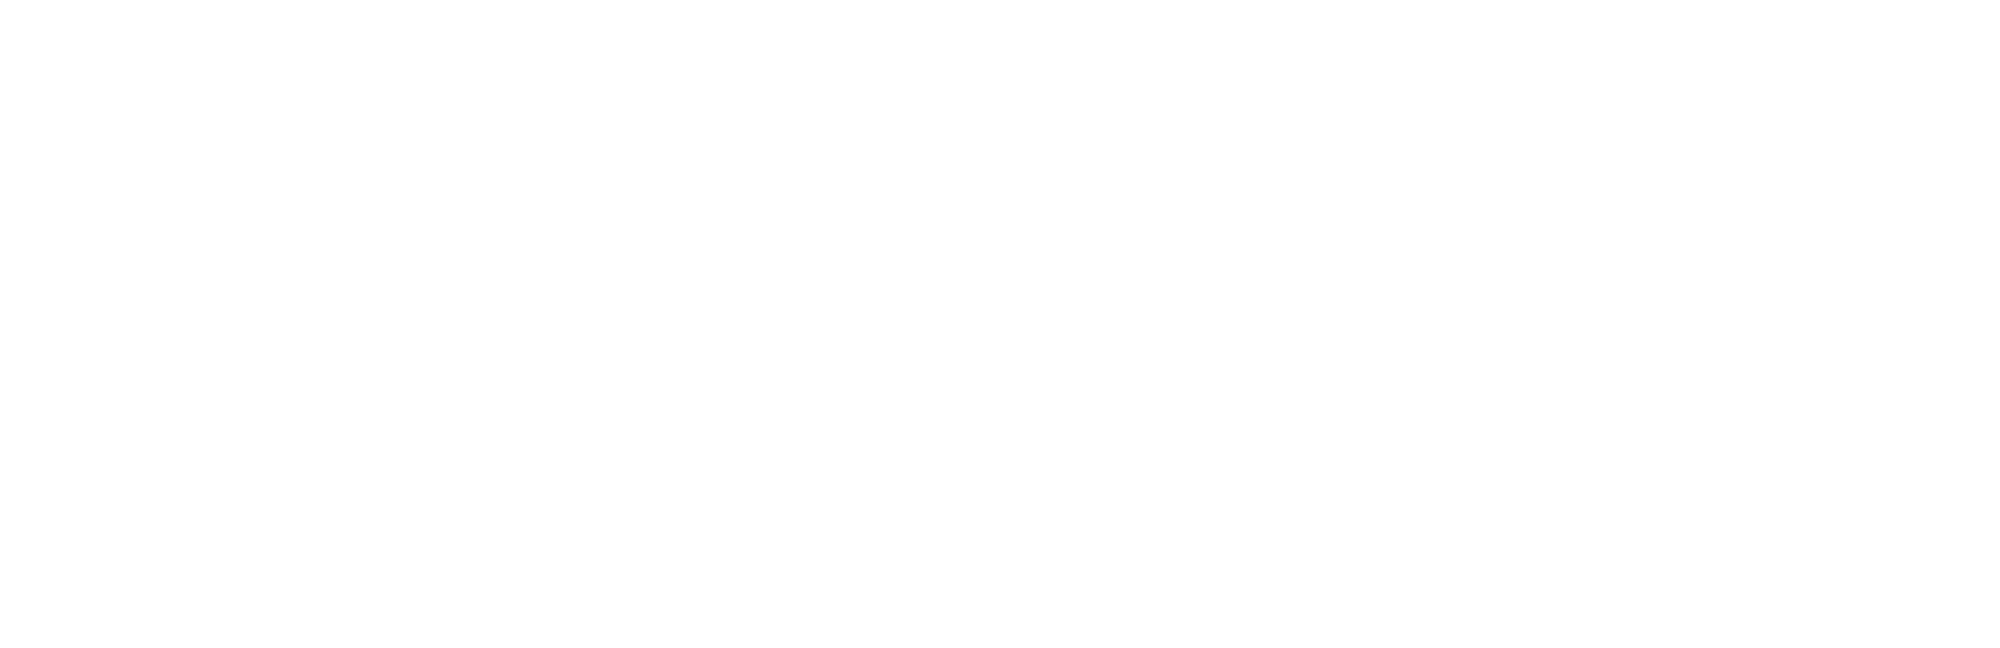 Honda_Weißgrau_WB